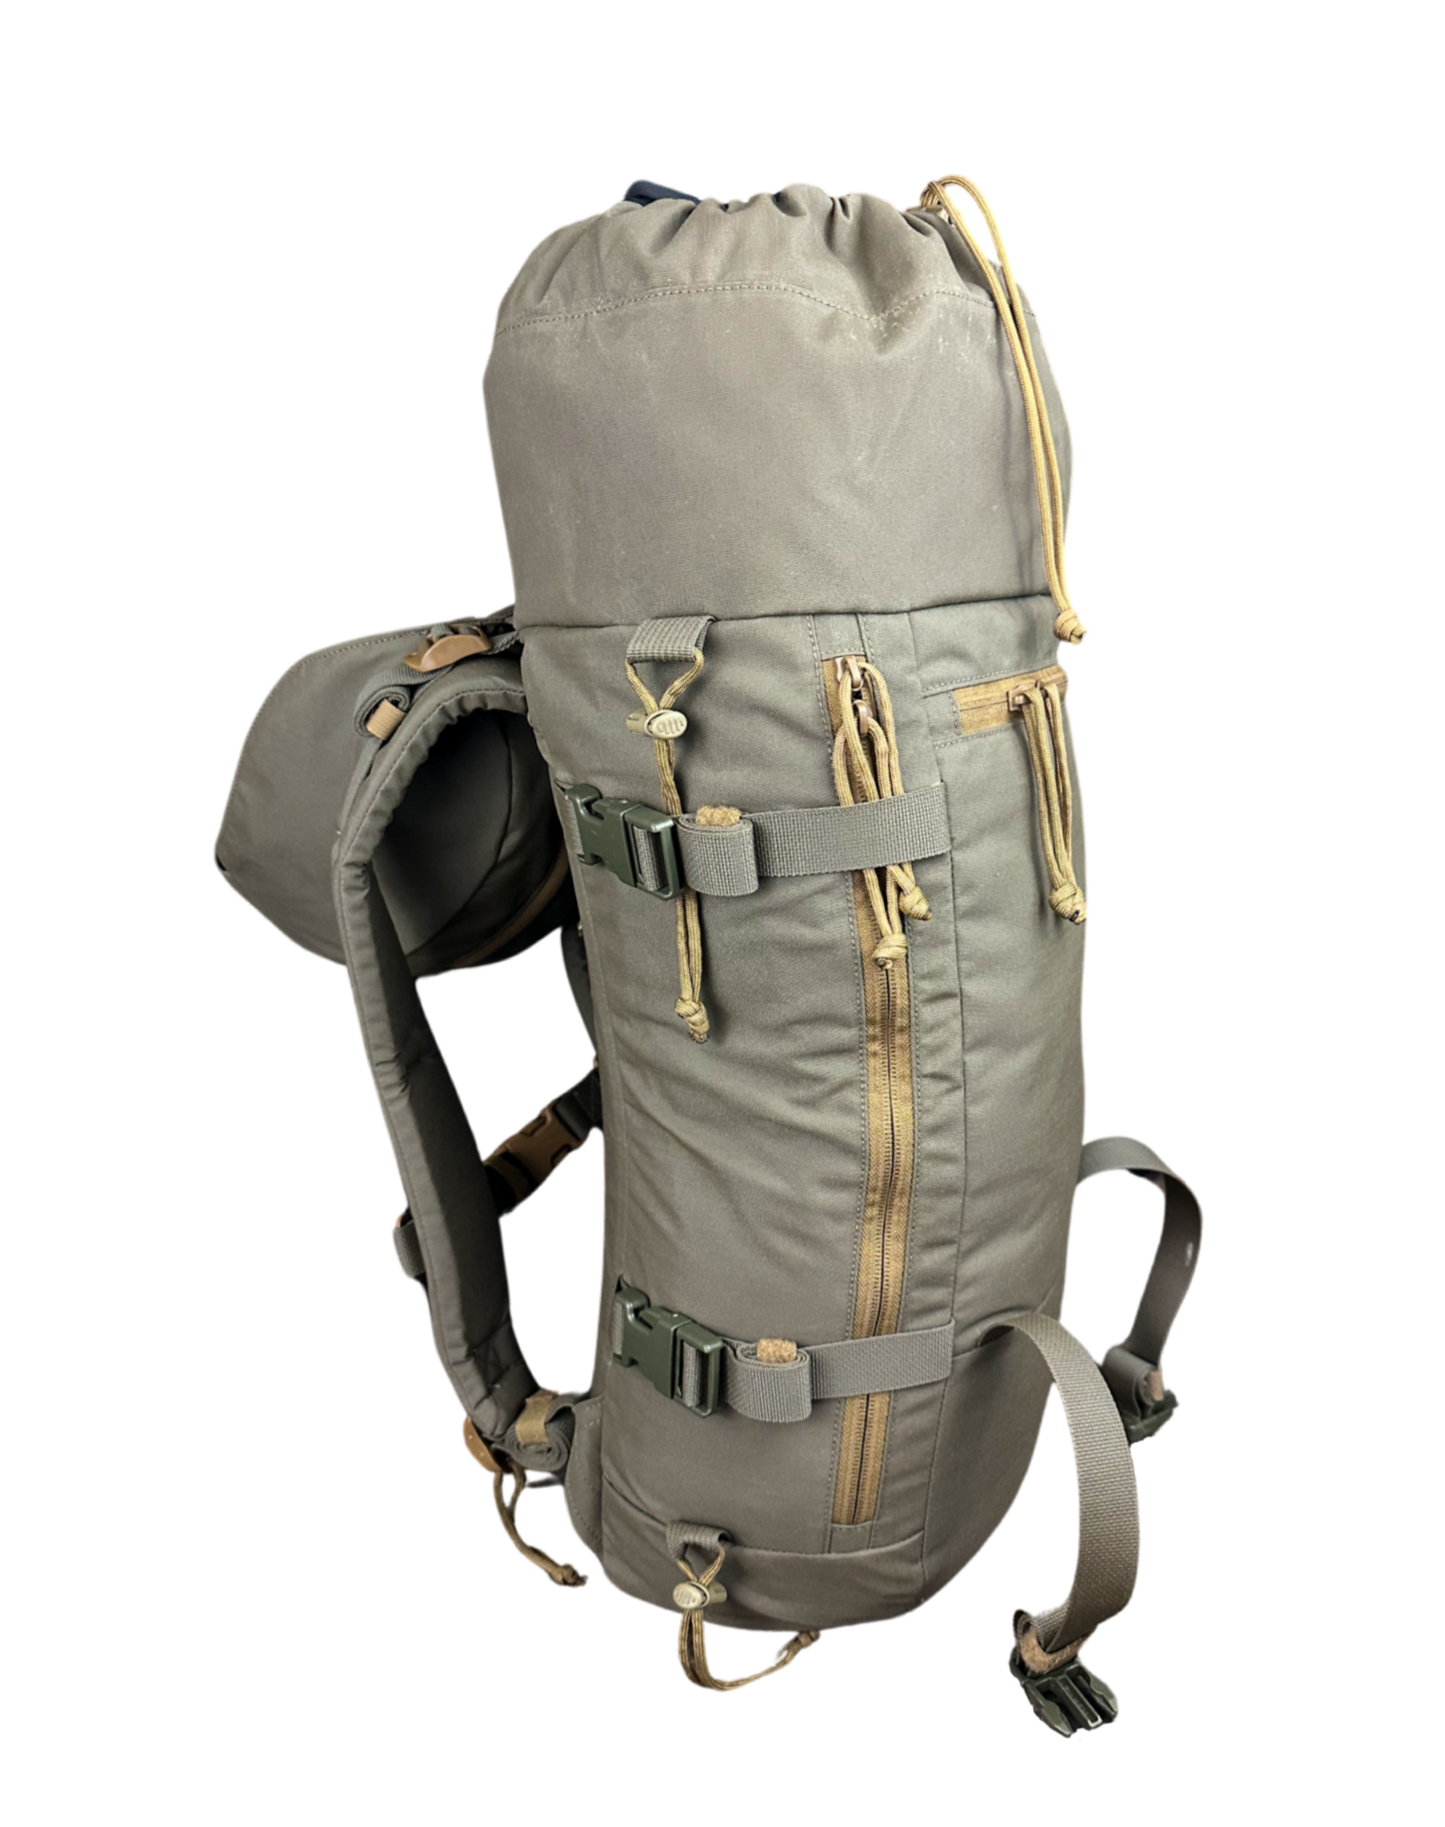 Ruckmule gunner mountain hiking hunting scouting backpack ranger green top load cinch lid 